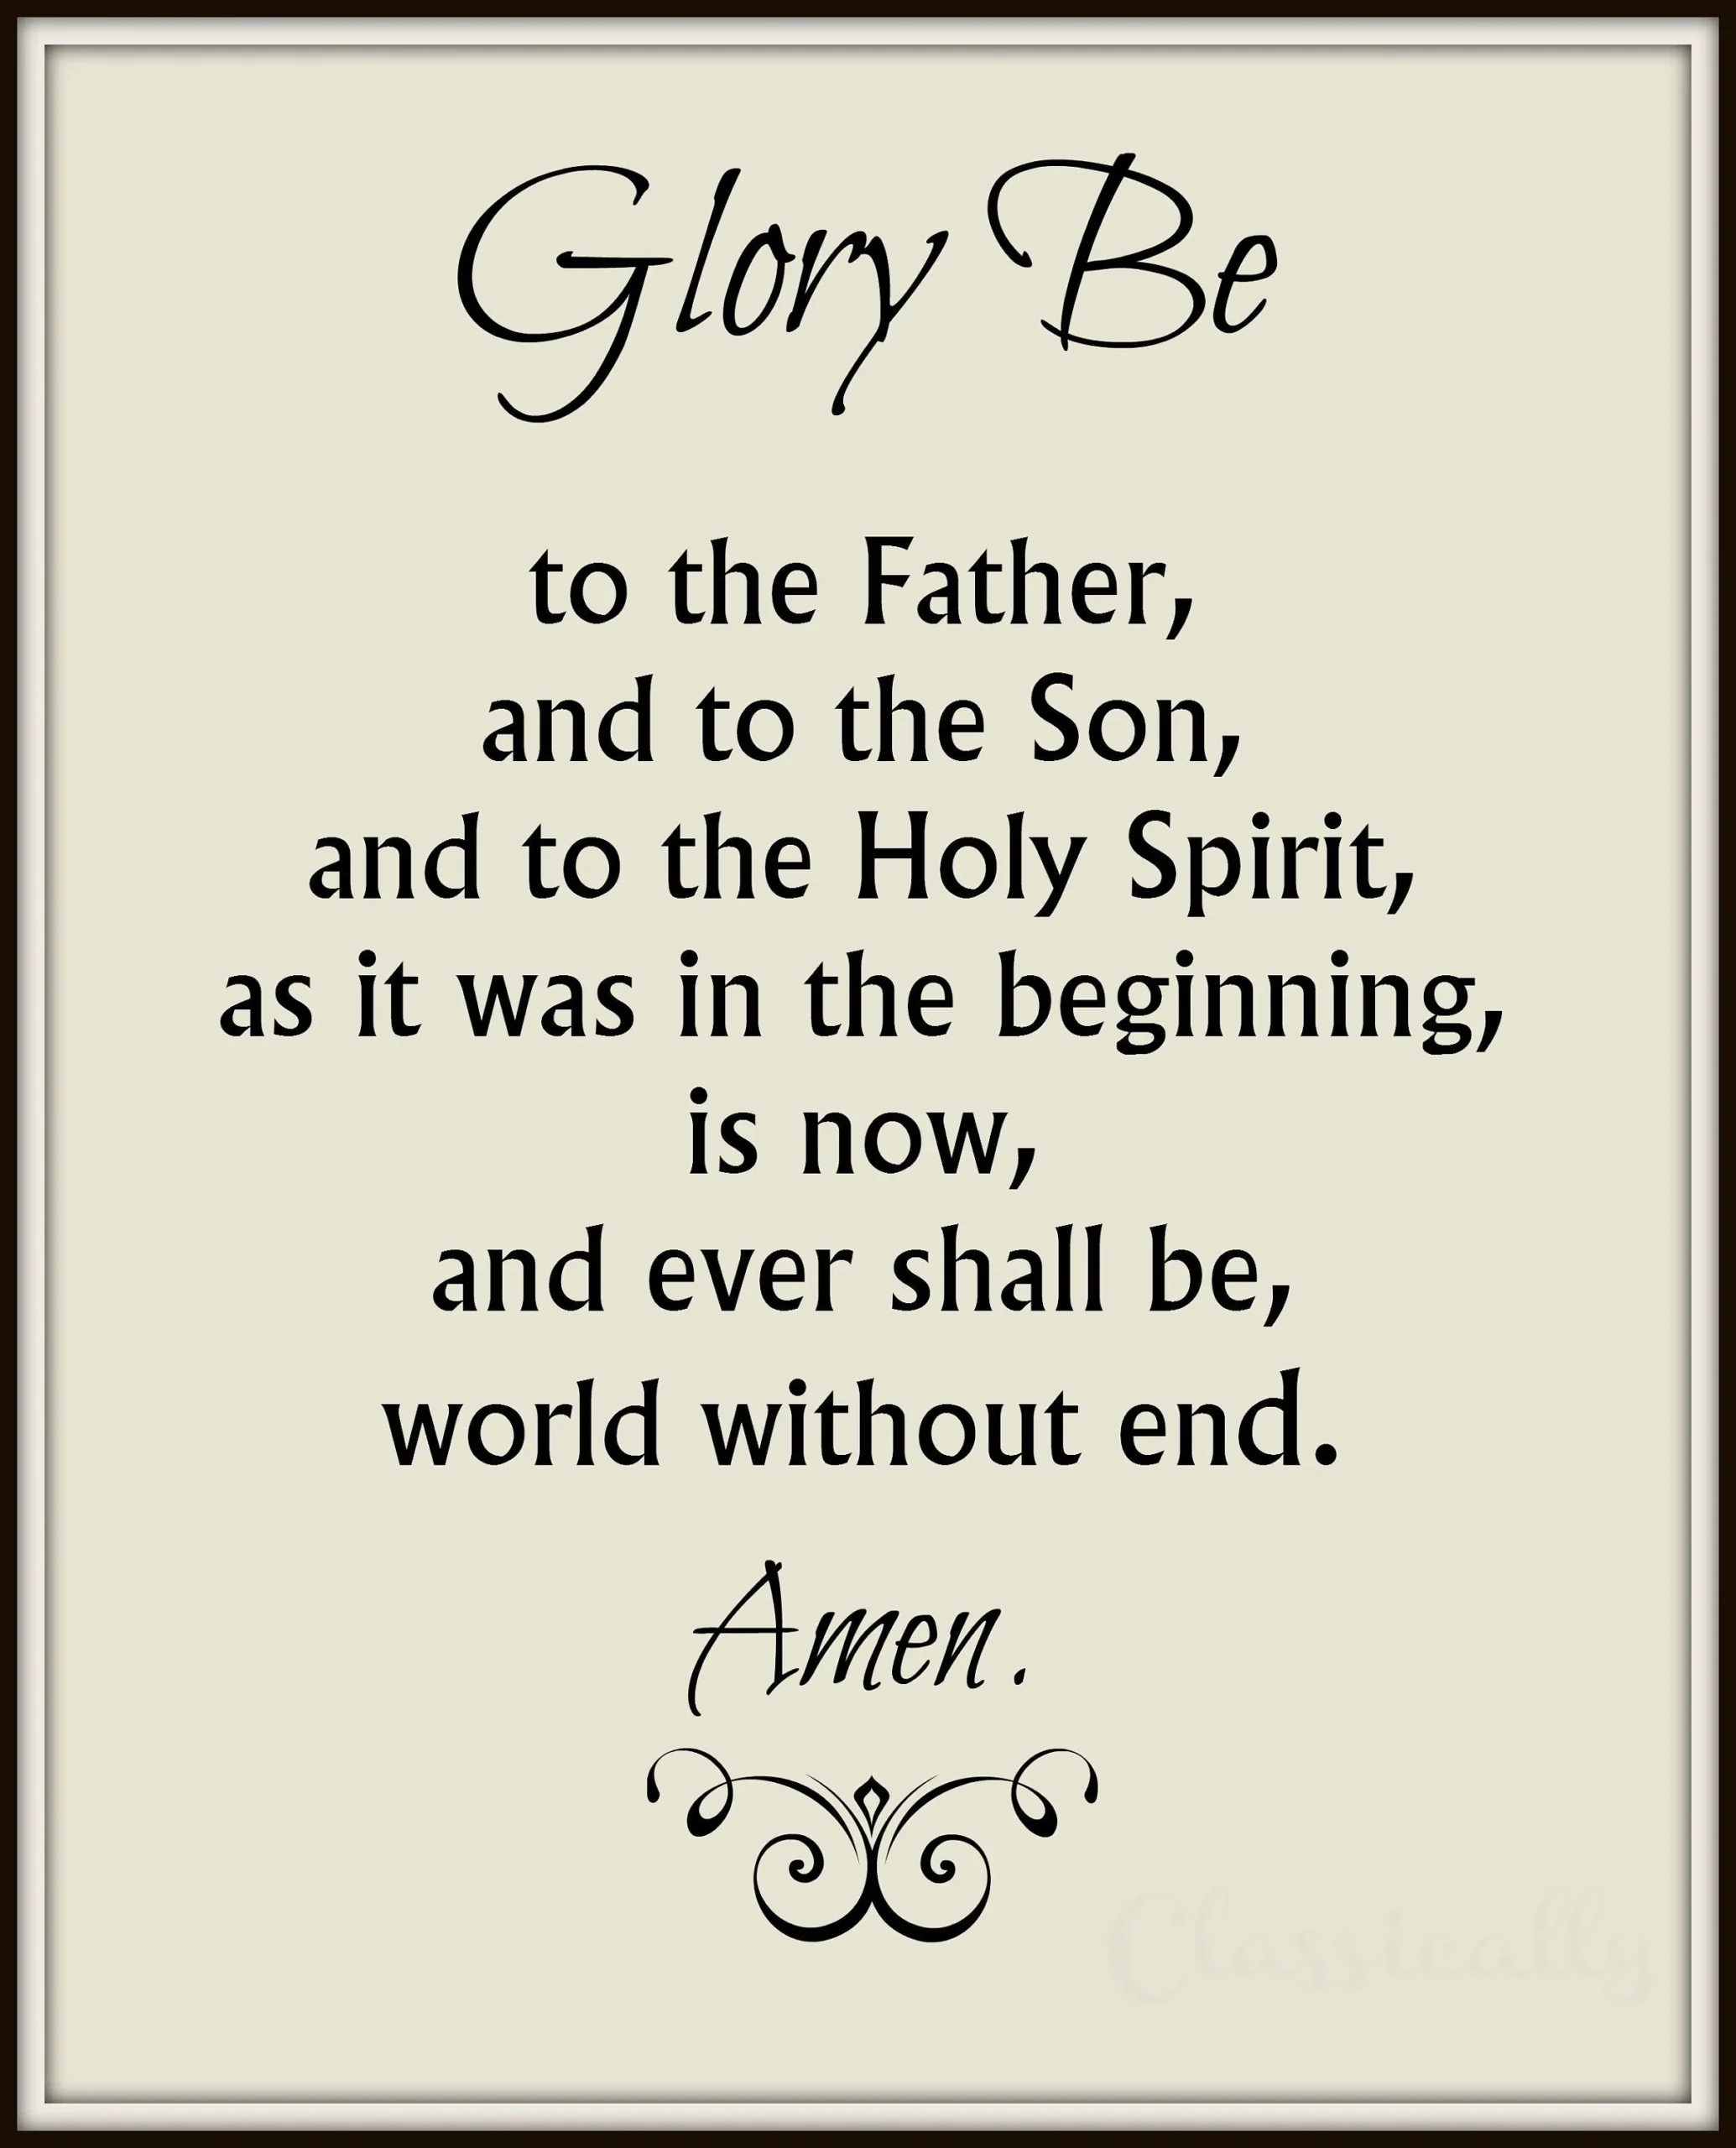 prayer for glory